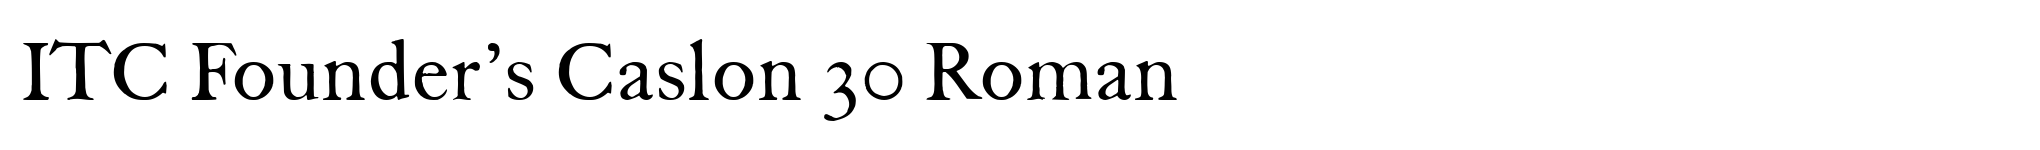 ITC Founder's Caslon 30 Roman image